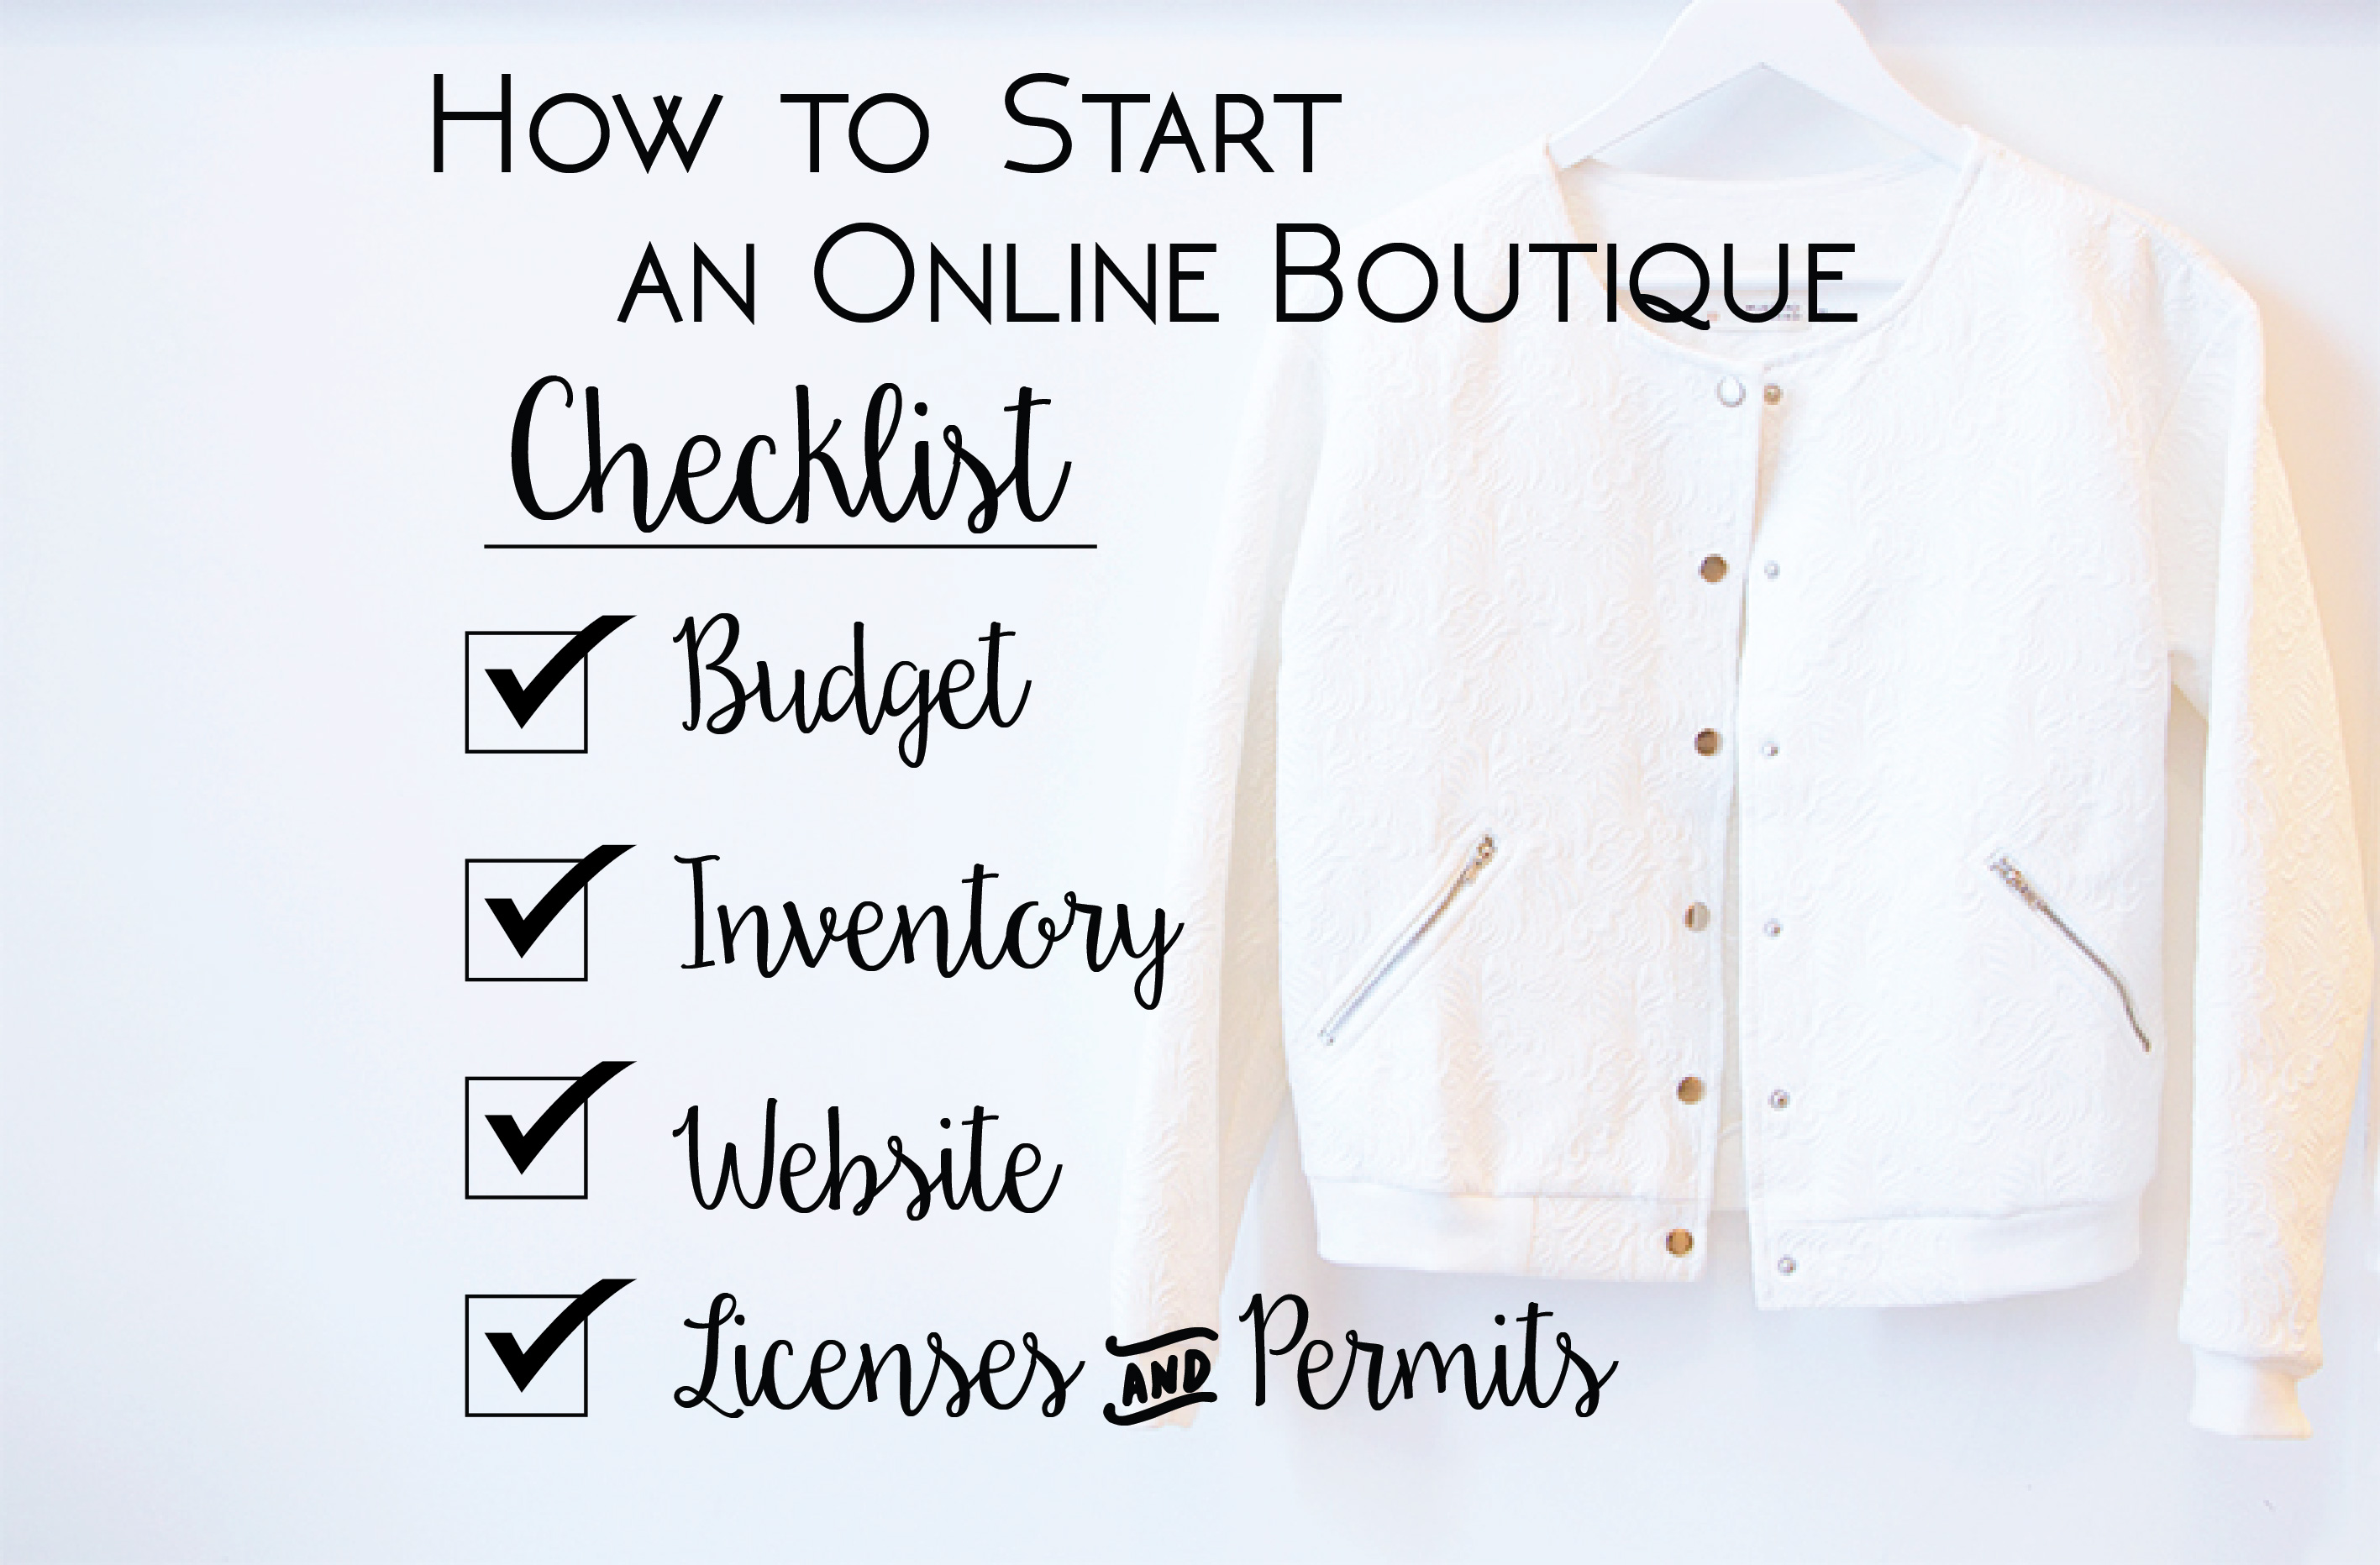 How To Start an Online Boutique Checklist